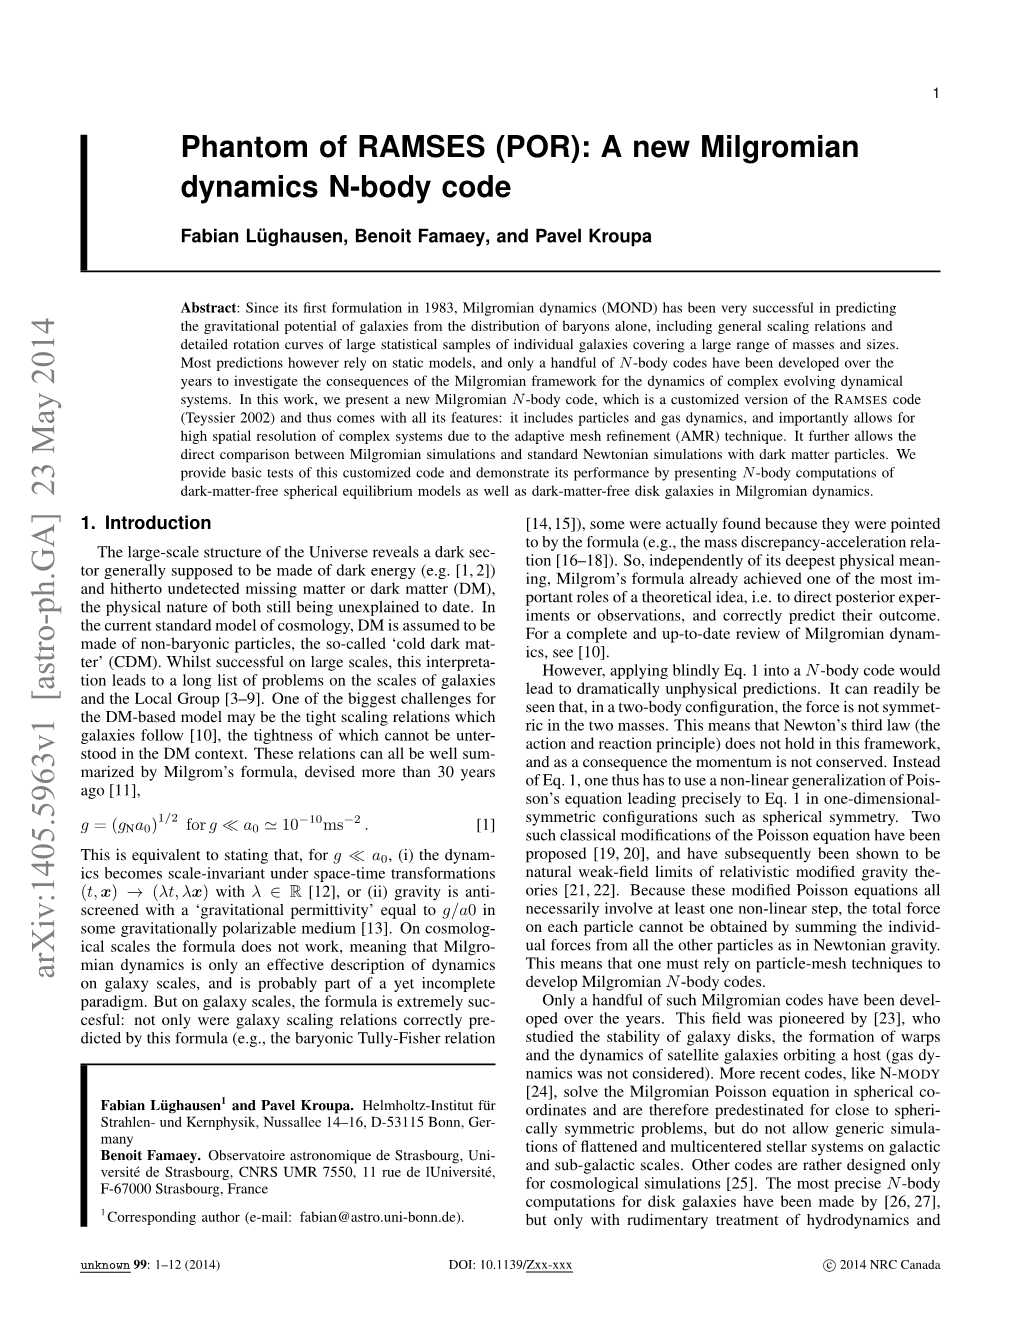 Phantom of RAMSES (POR): a New Milgromian Dynamics N-Body Code